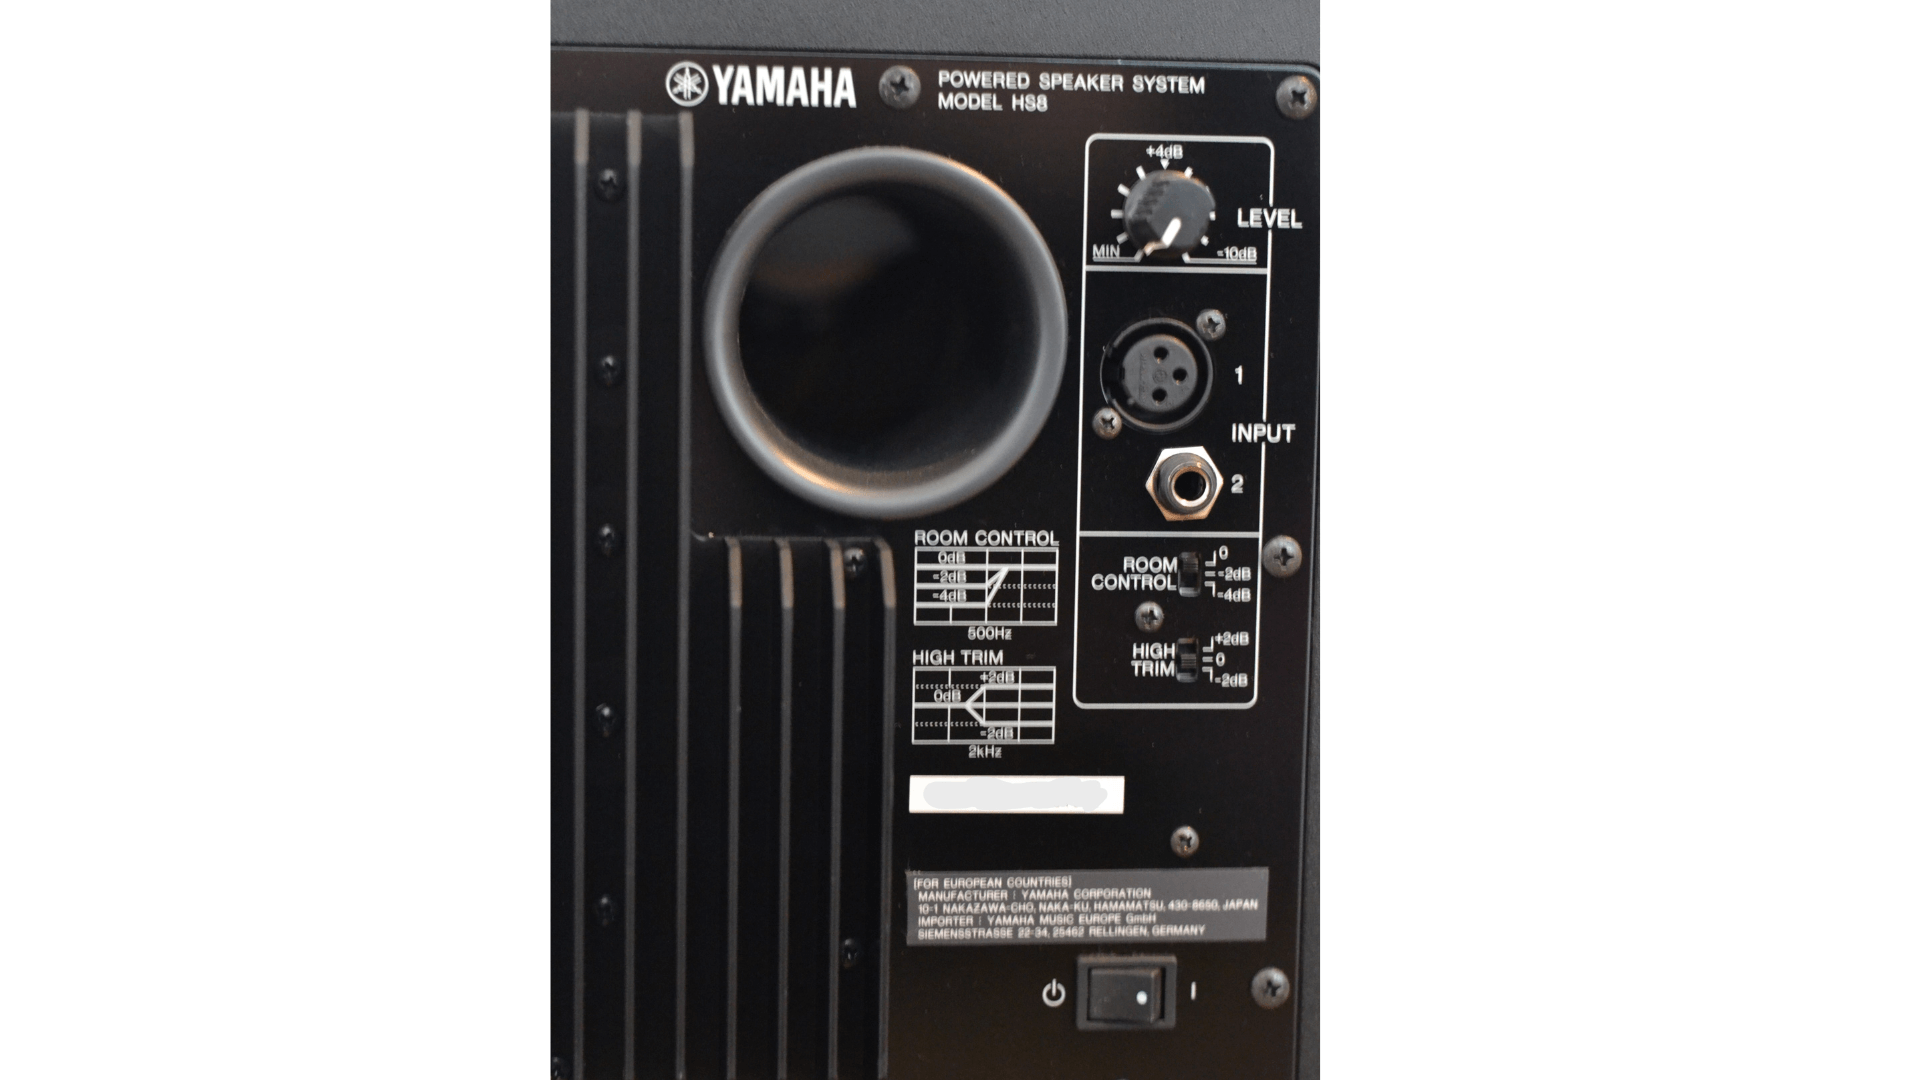 Lautsprecherbox YAMAHA Powered Studio Monitor HS 8 - 4e4002b4-175e-4ddb-836d-e783148fdac3